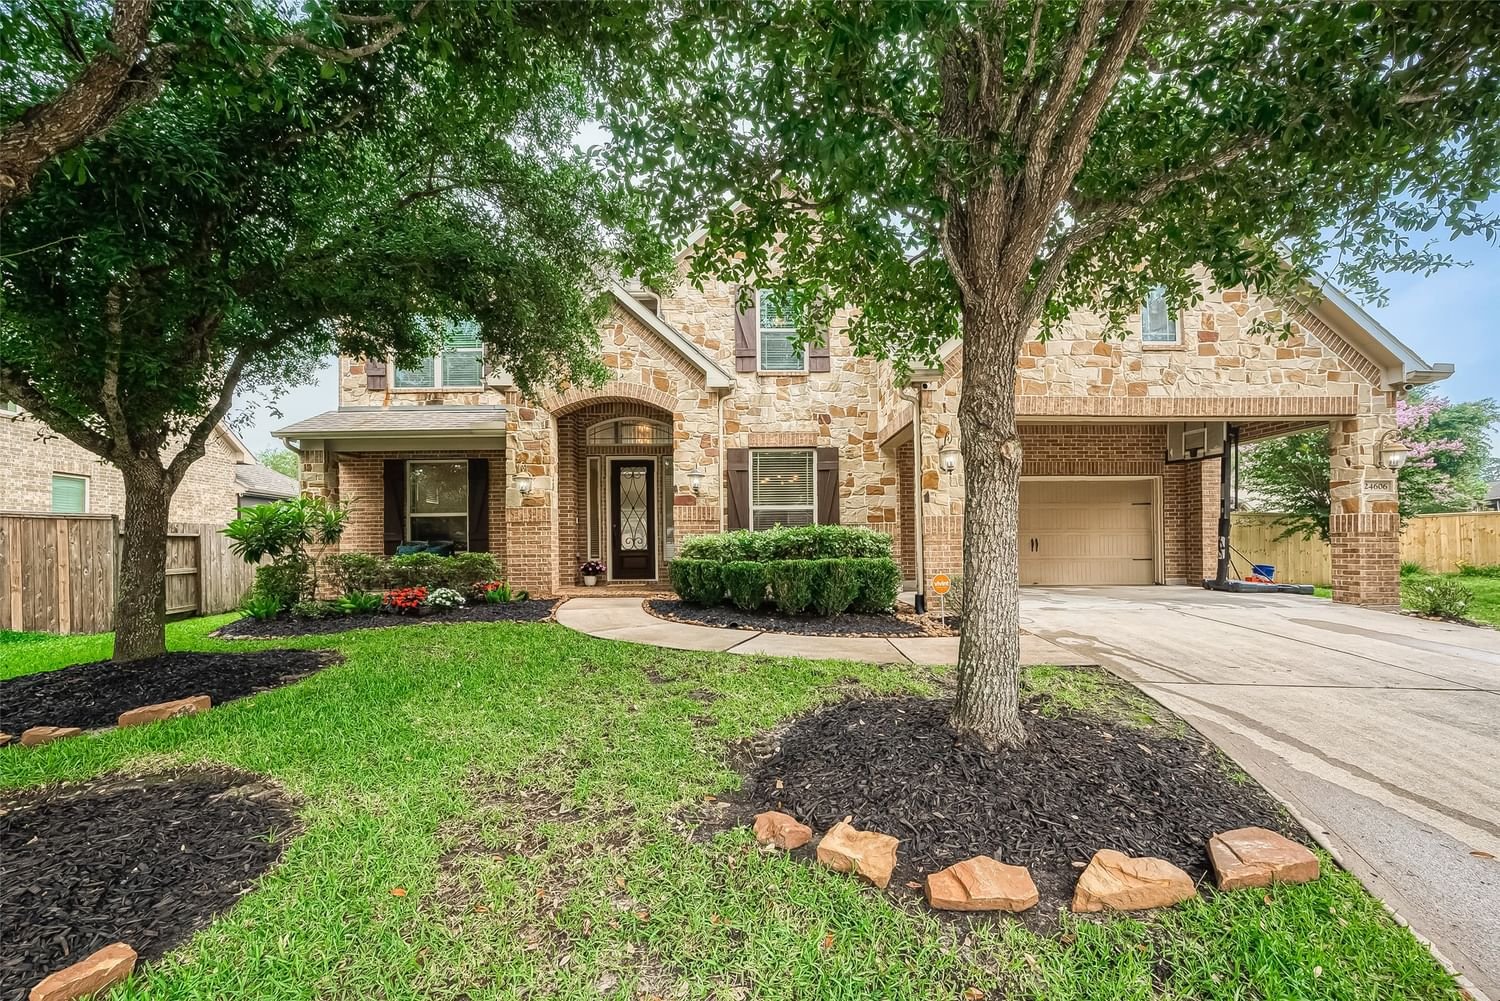 Real estate property located at 24606 Bennett Ridge Lane, Montgomery, Oakhurst Greens, Porter, TX, US